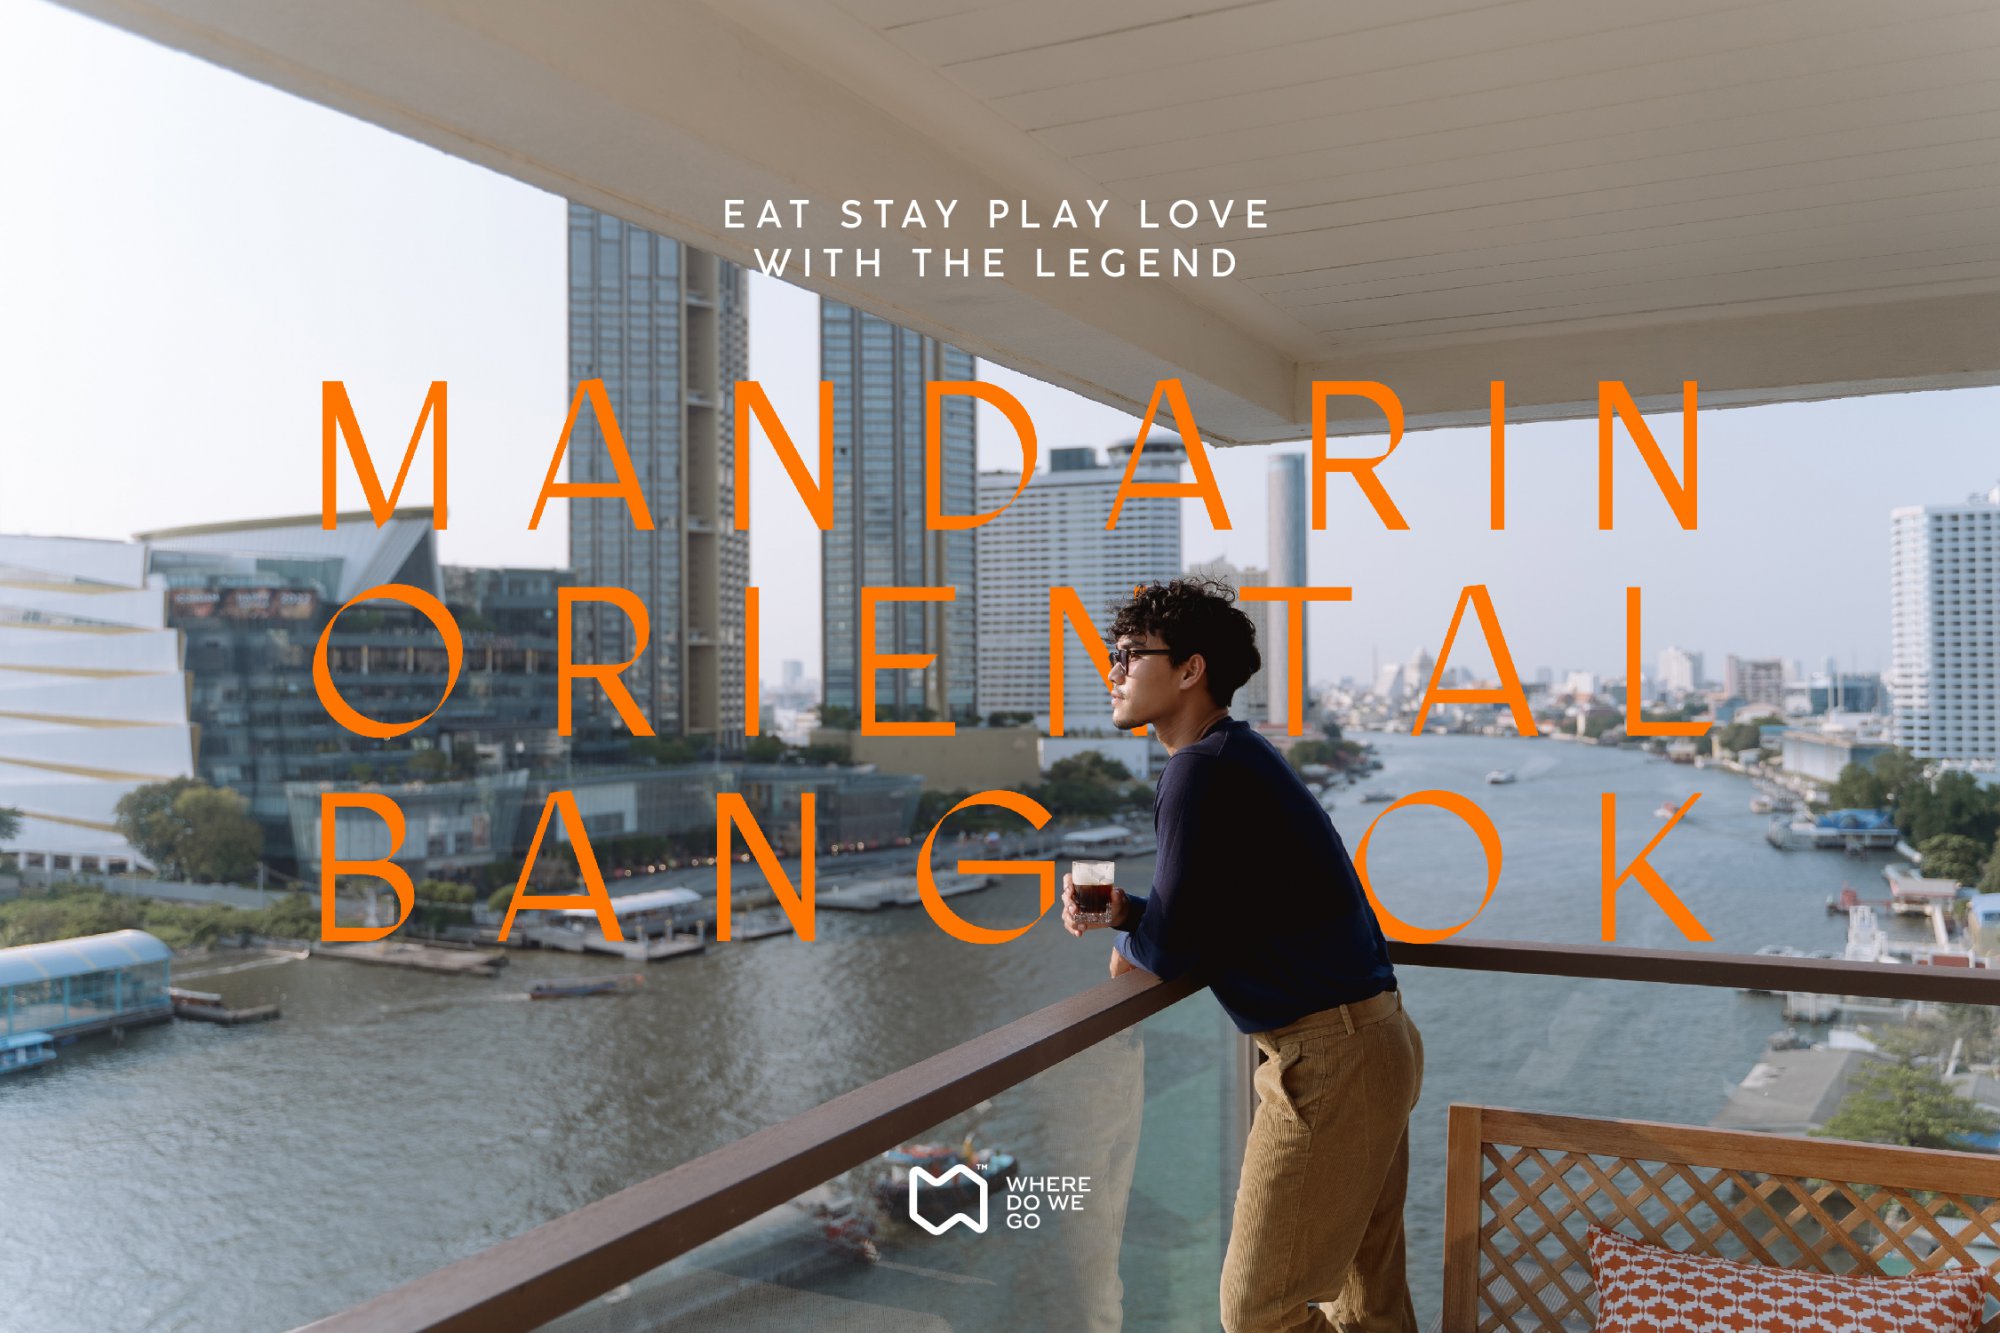 Eat Stay Play Love with the legend, Mandarin Oriental Bangkok.